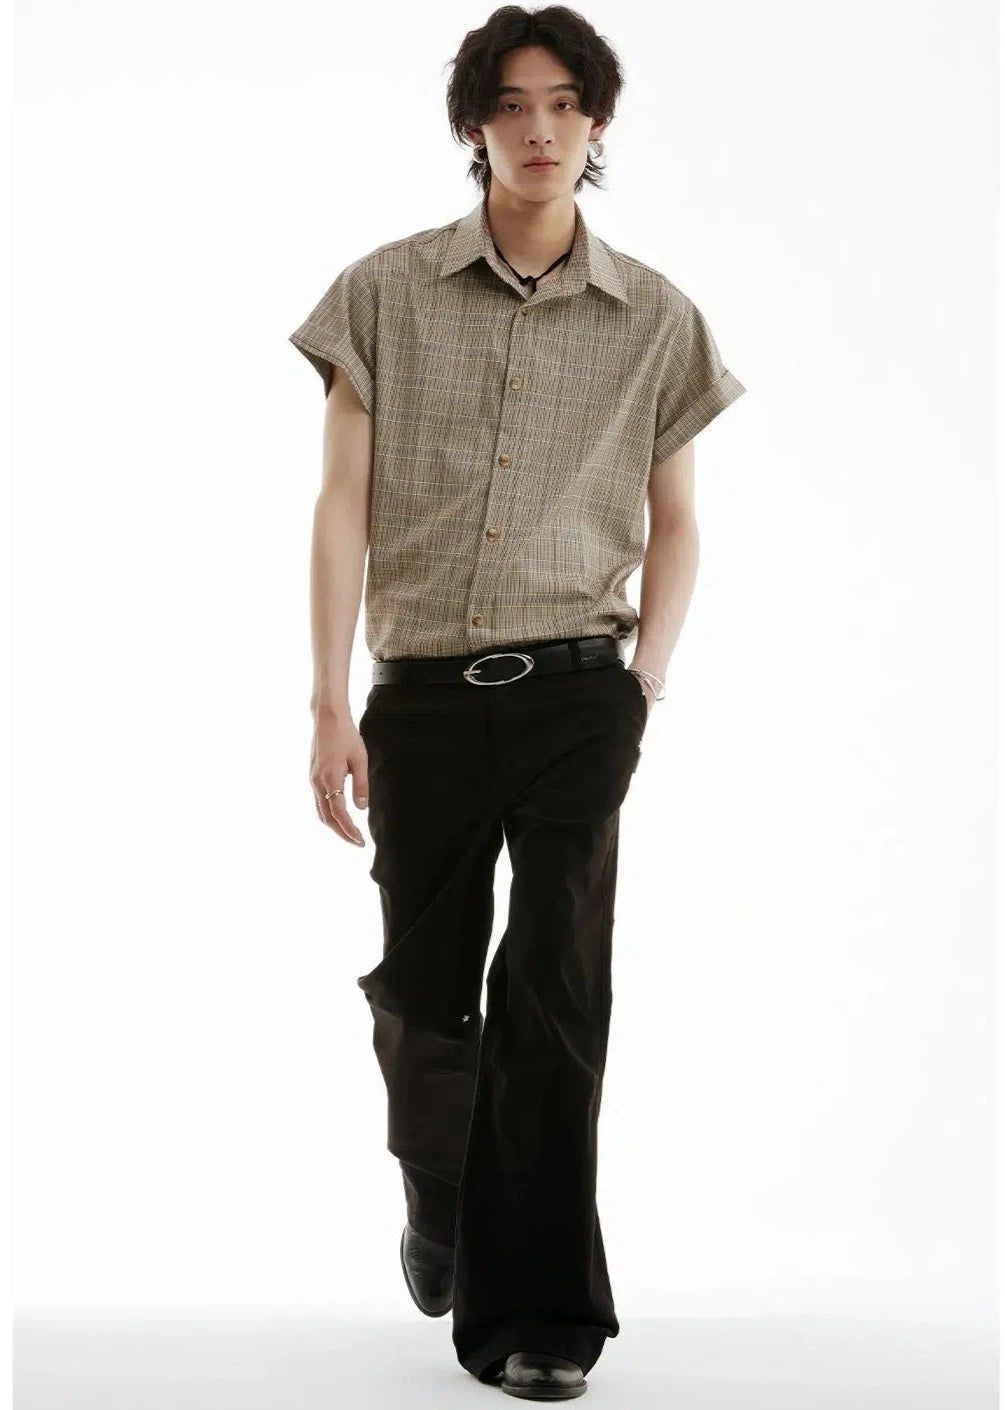 Folded Sleeve Plaid Shirt Korean Street Fashion Shirt By Funky Fun Shop Online at OH Vault